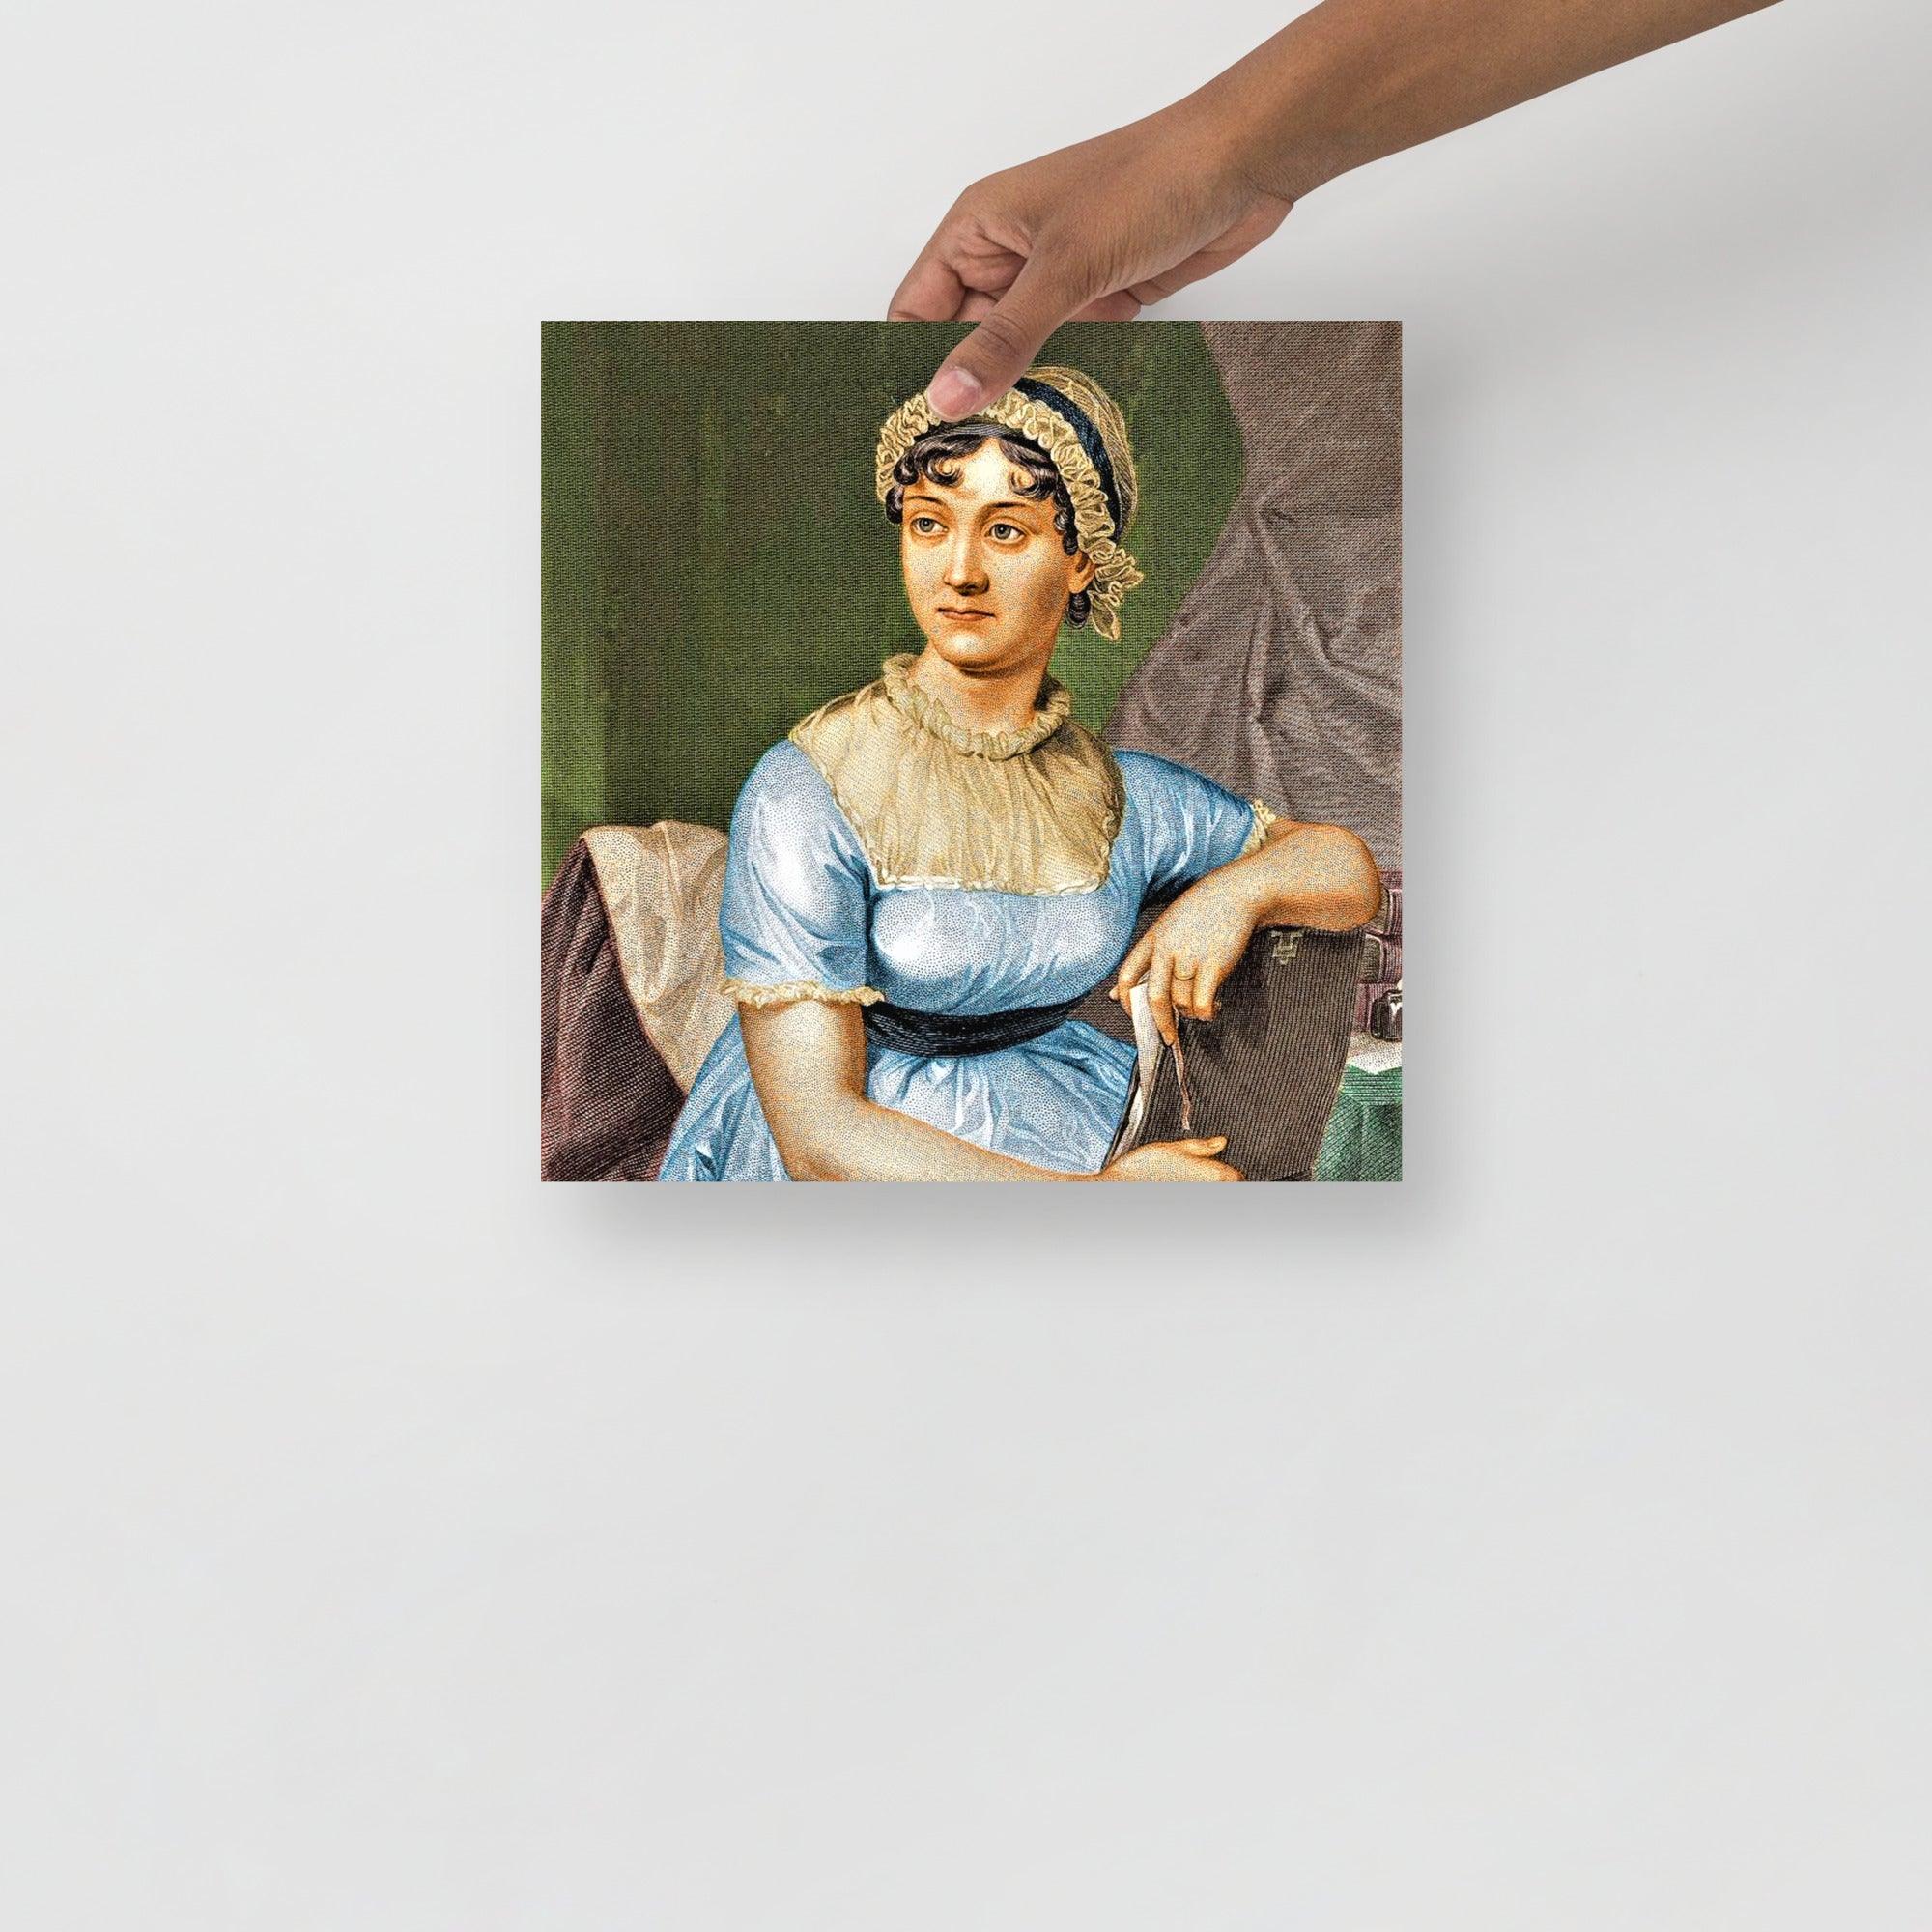 A Jane Austen poster on a plain backdrop in size 12x12”.